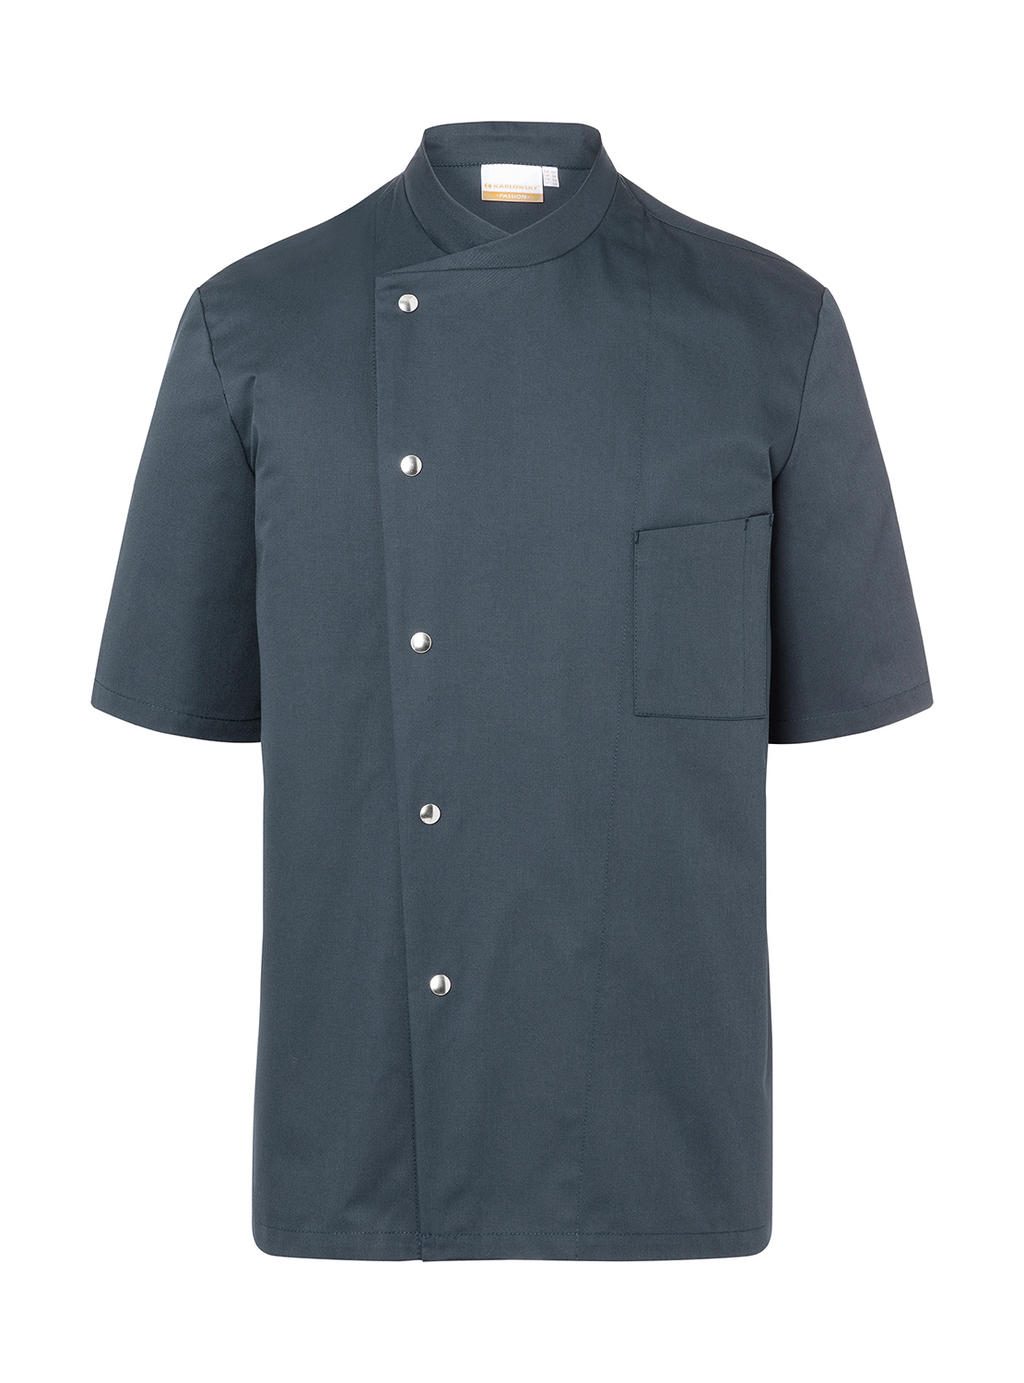  Chef Jacket Gustav Short Sleeve in Farbe Anthracite